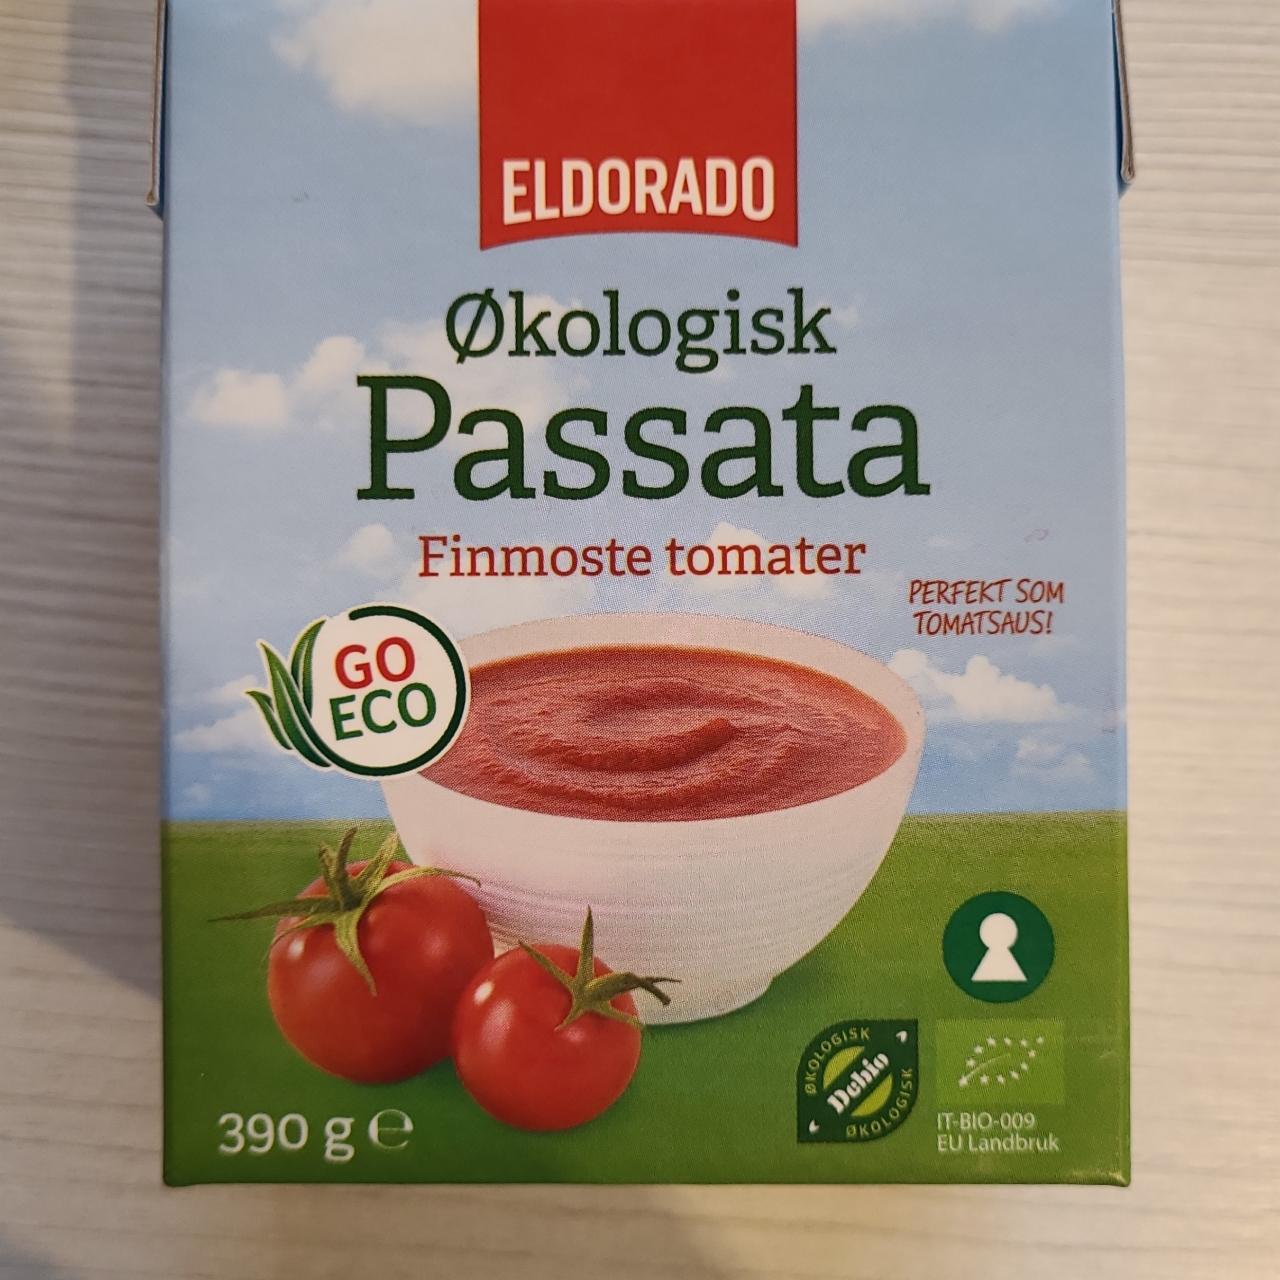 Fotografie - Økologisk Passata Finmoste tomater Eldorado